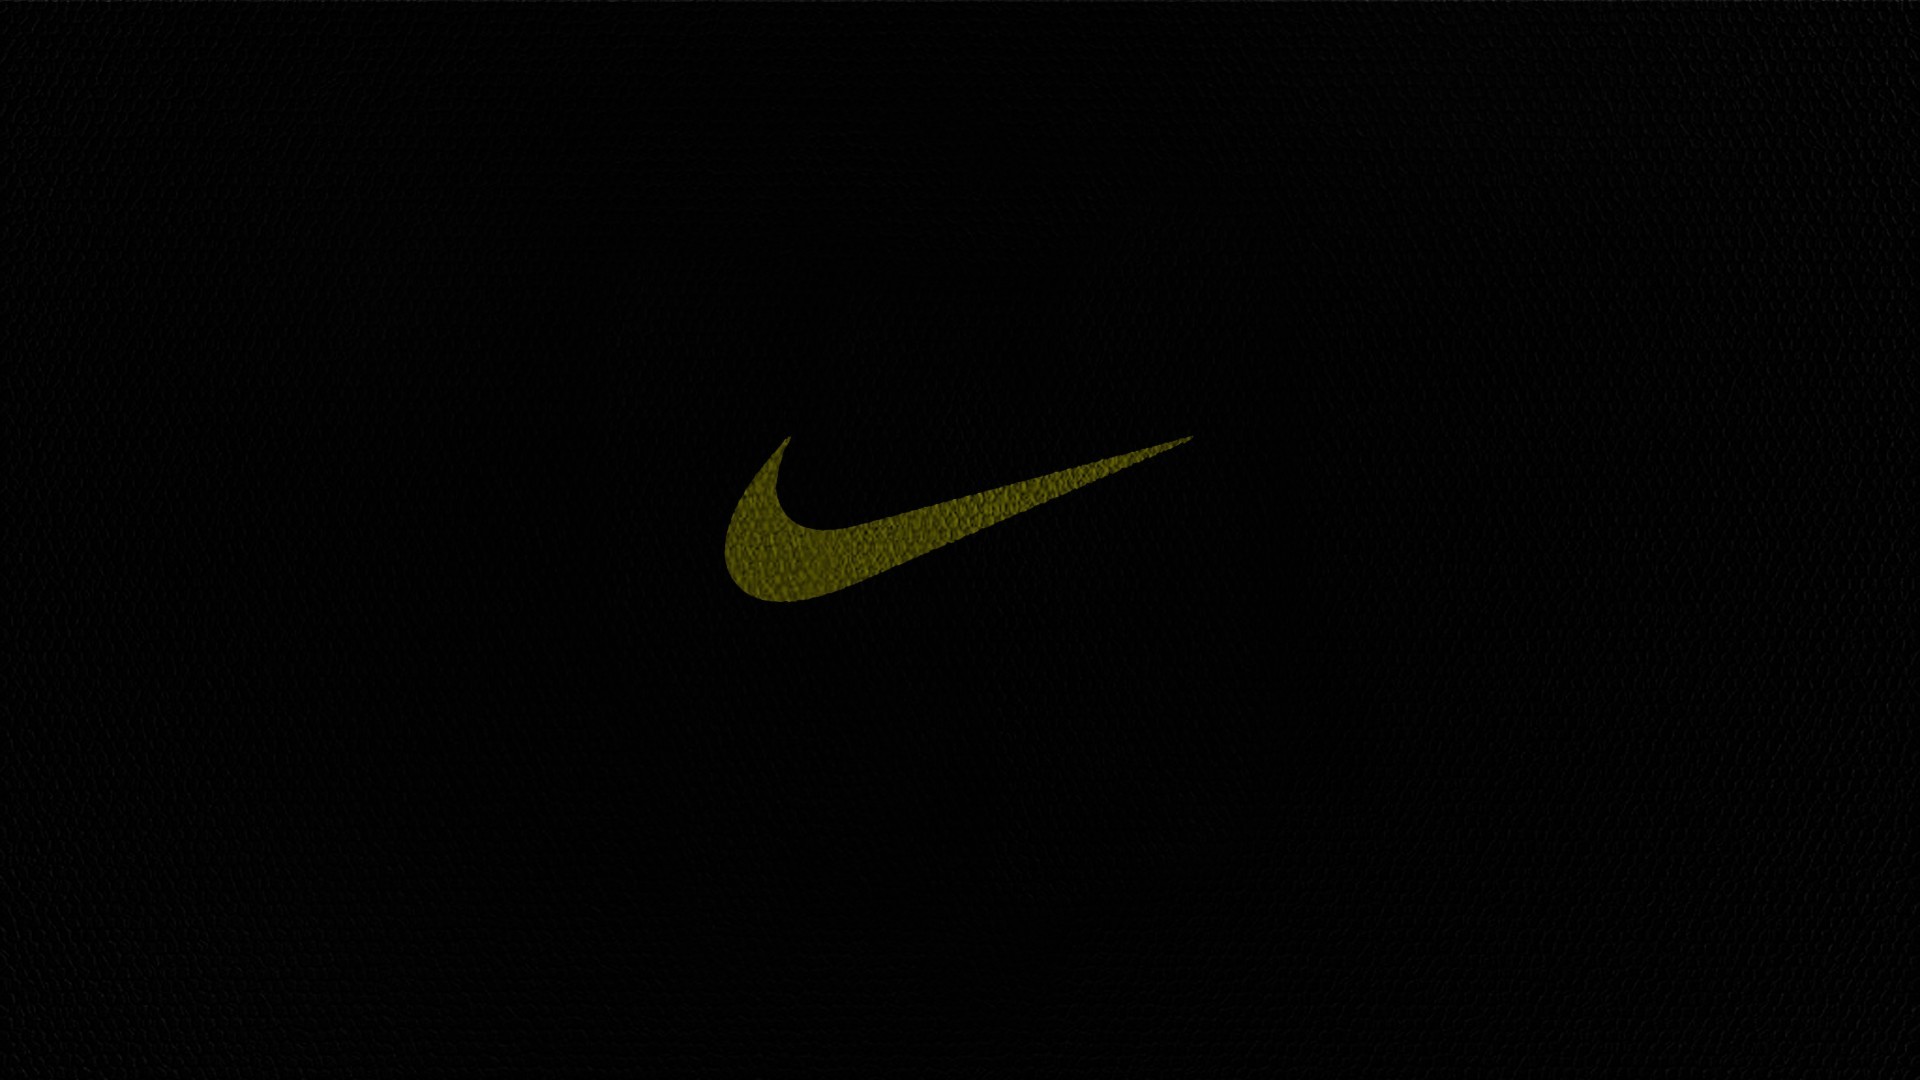 Nike Desktop Wallpaper (74+ images)